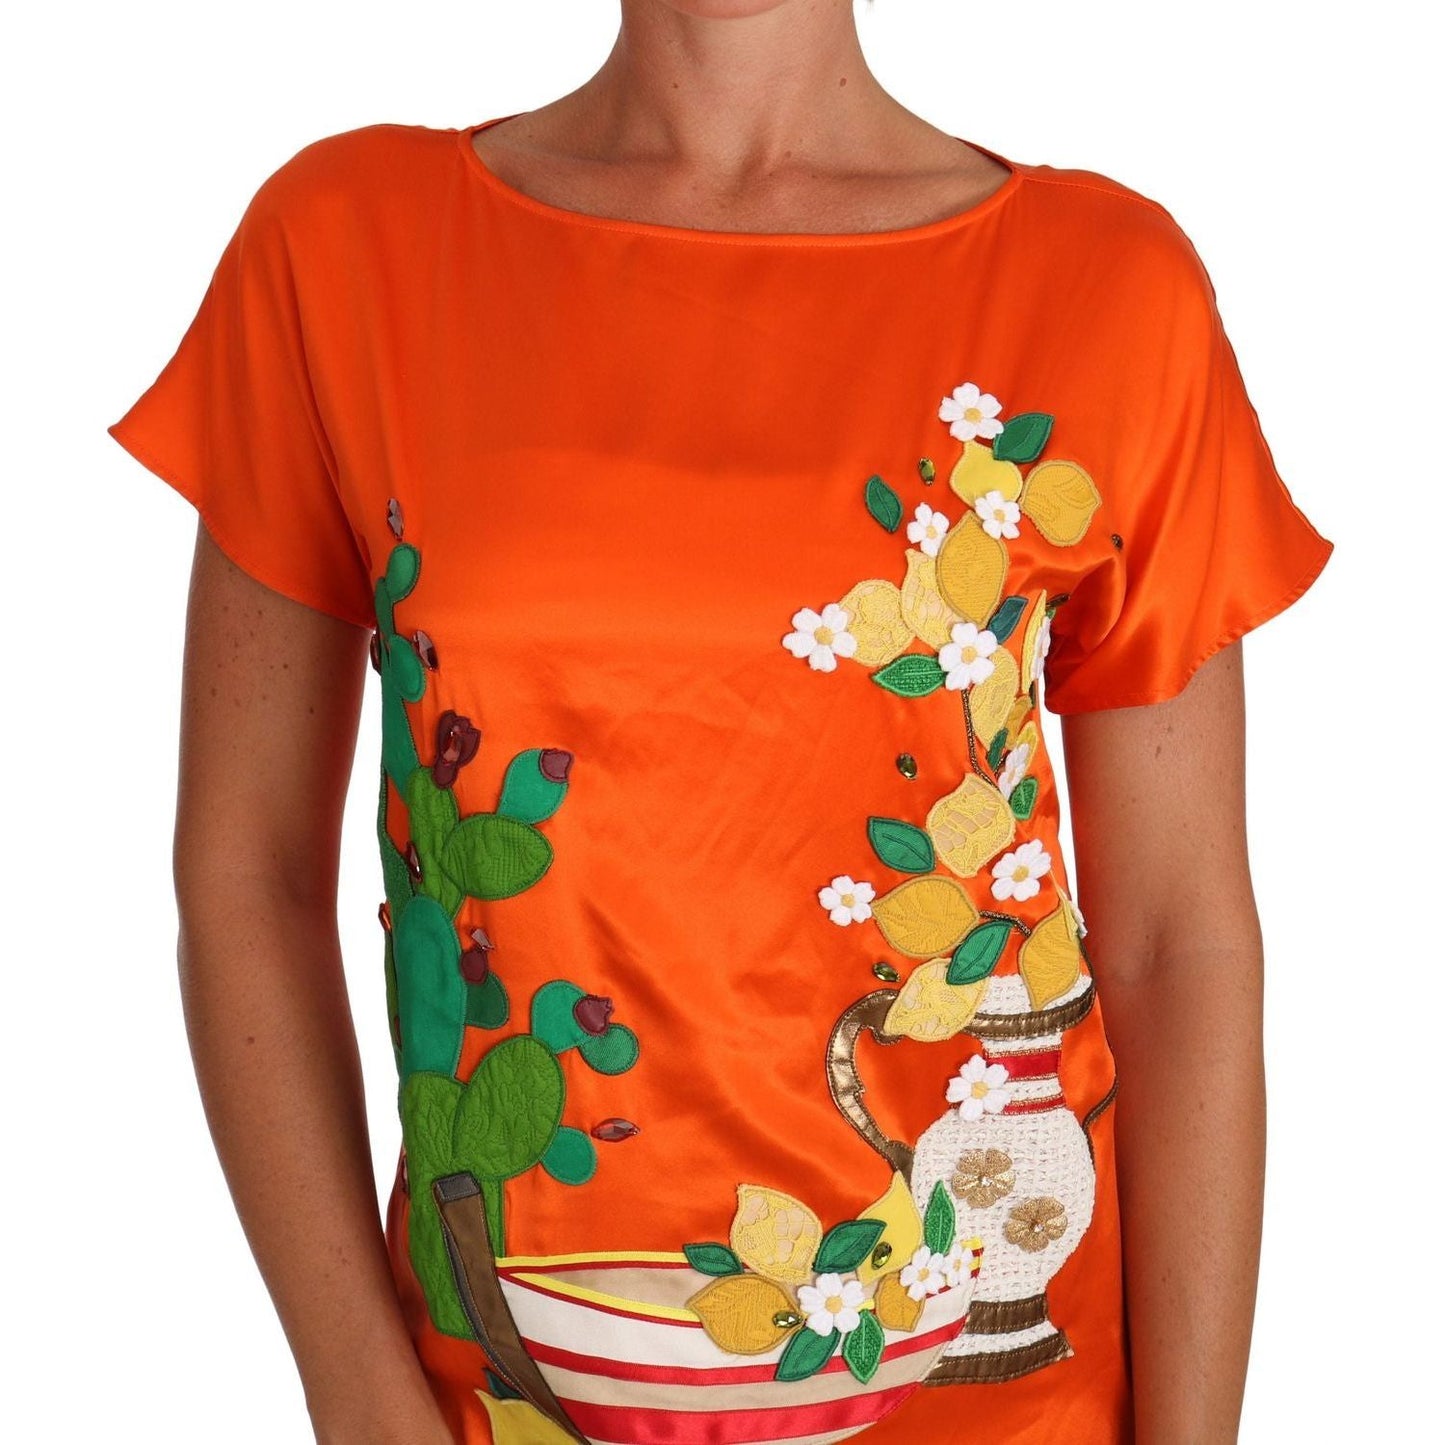 Dolce & Gabbana Sicilian Summer Silk Crystal-Embellished Top silk-orange-lemon-crystal-t-shirt-top 643644-silk-orange-lemon-crystal-t-shirt-top-2.jpg